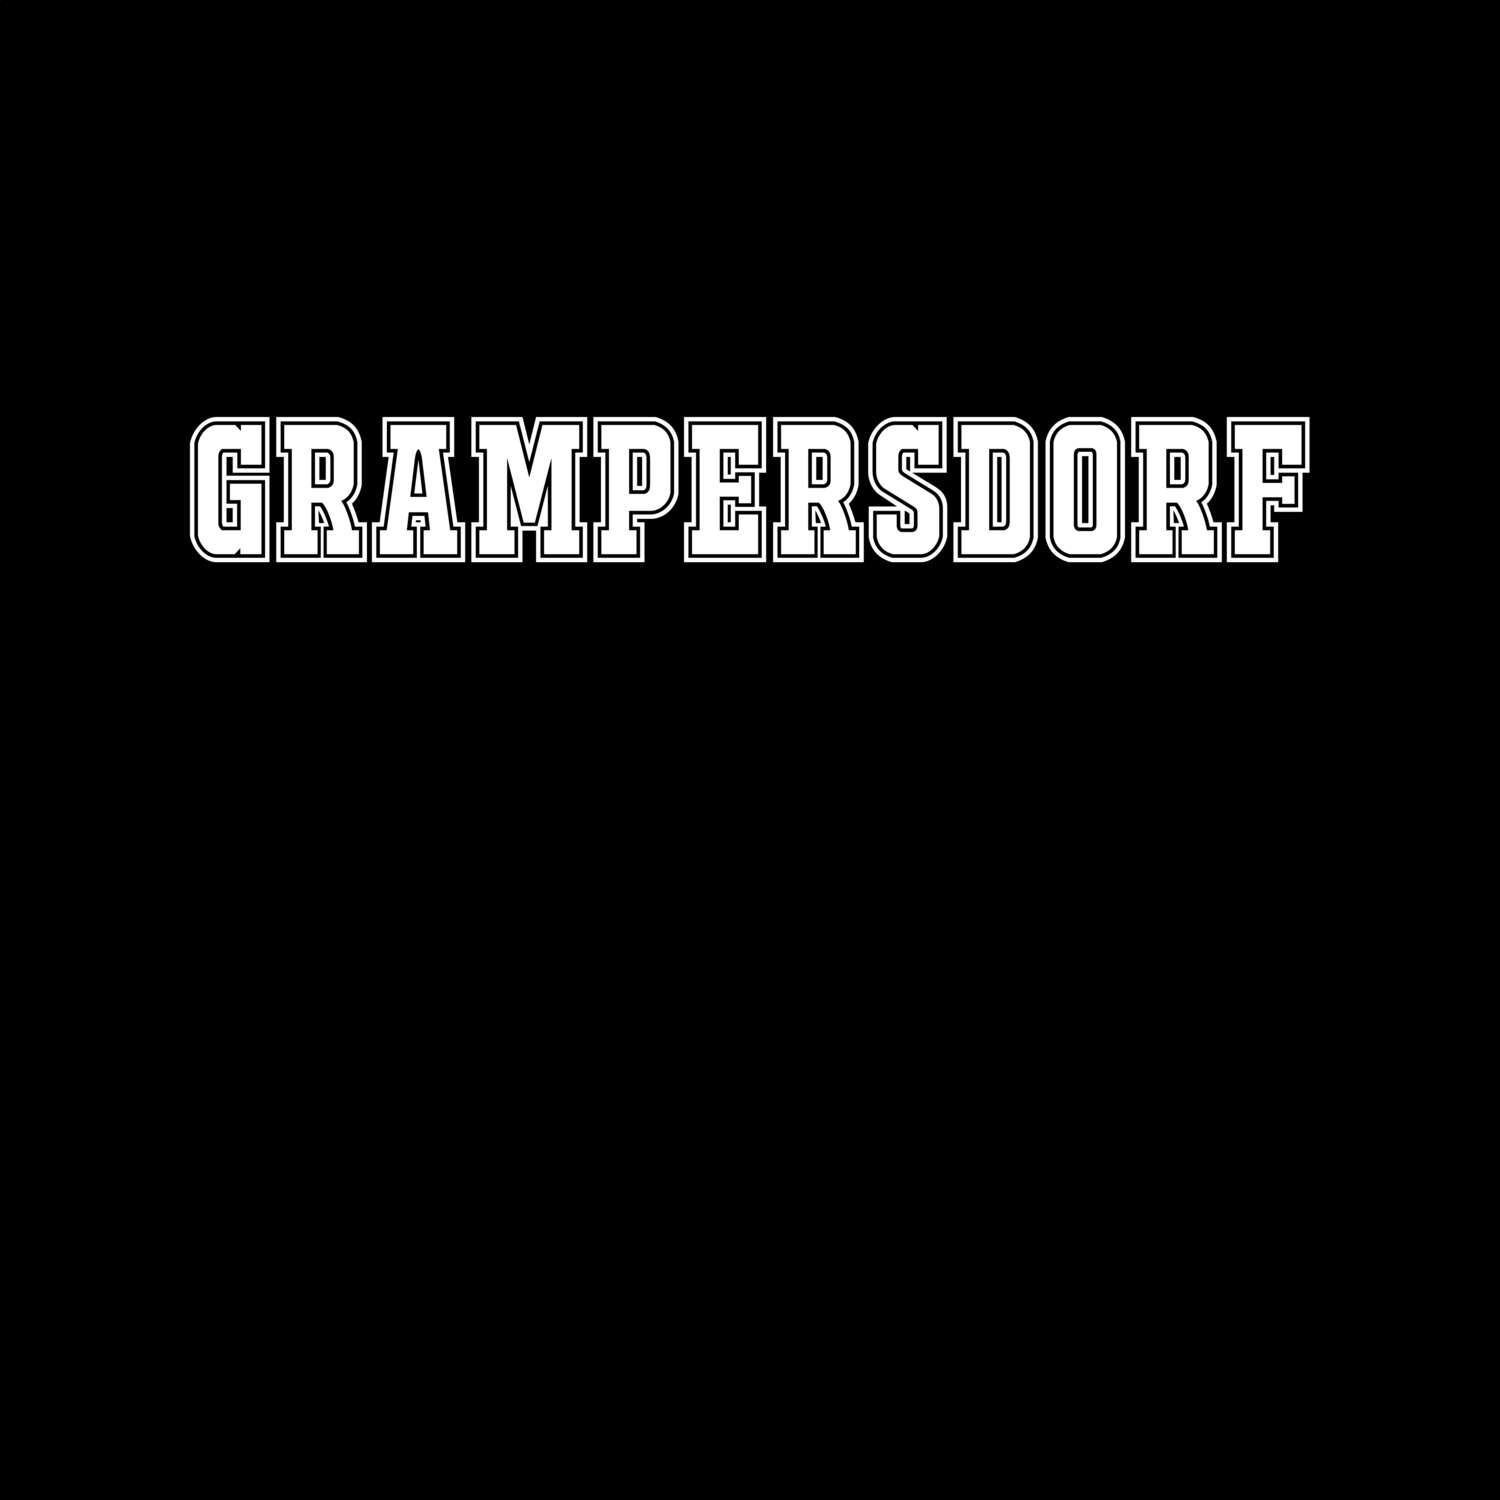 Grampersdorf T-Shirt »Classic«